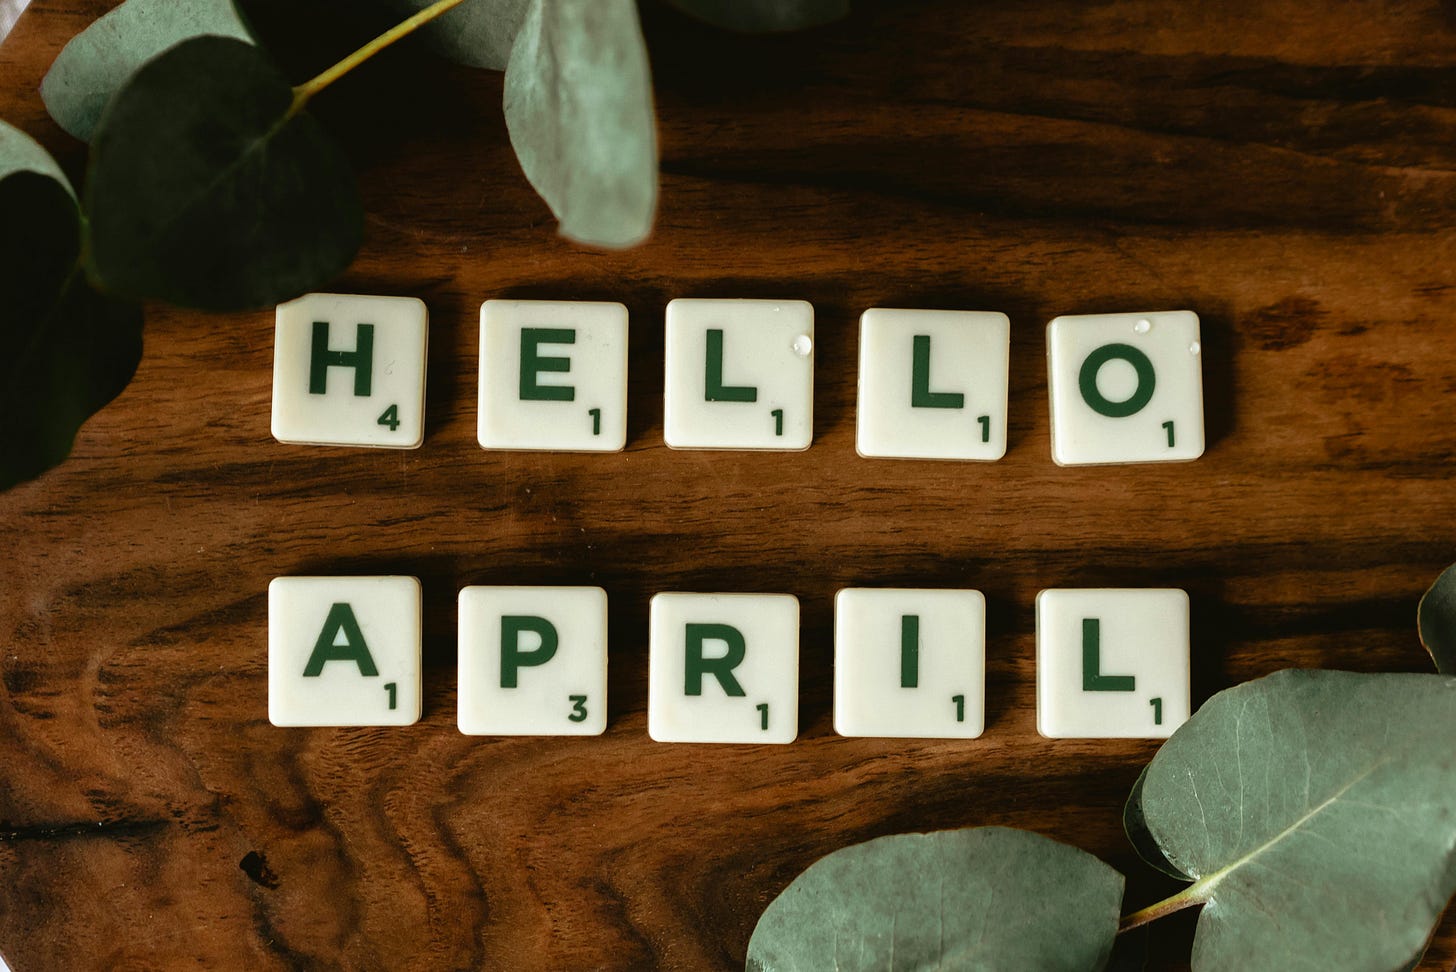 Scrabble letters spell "Hello April"